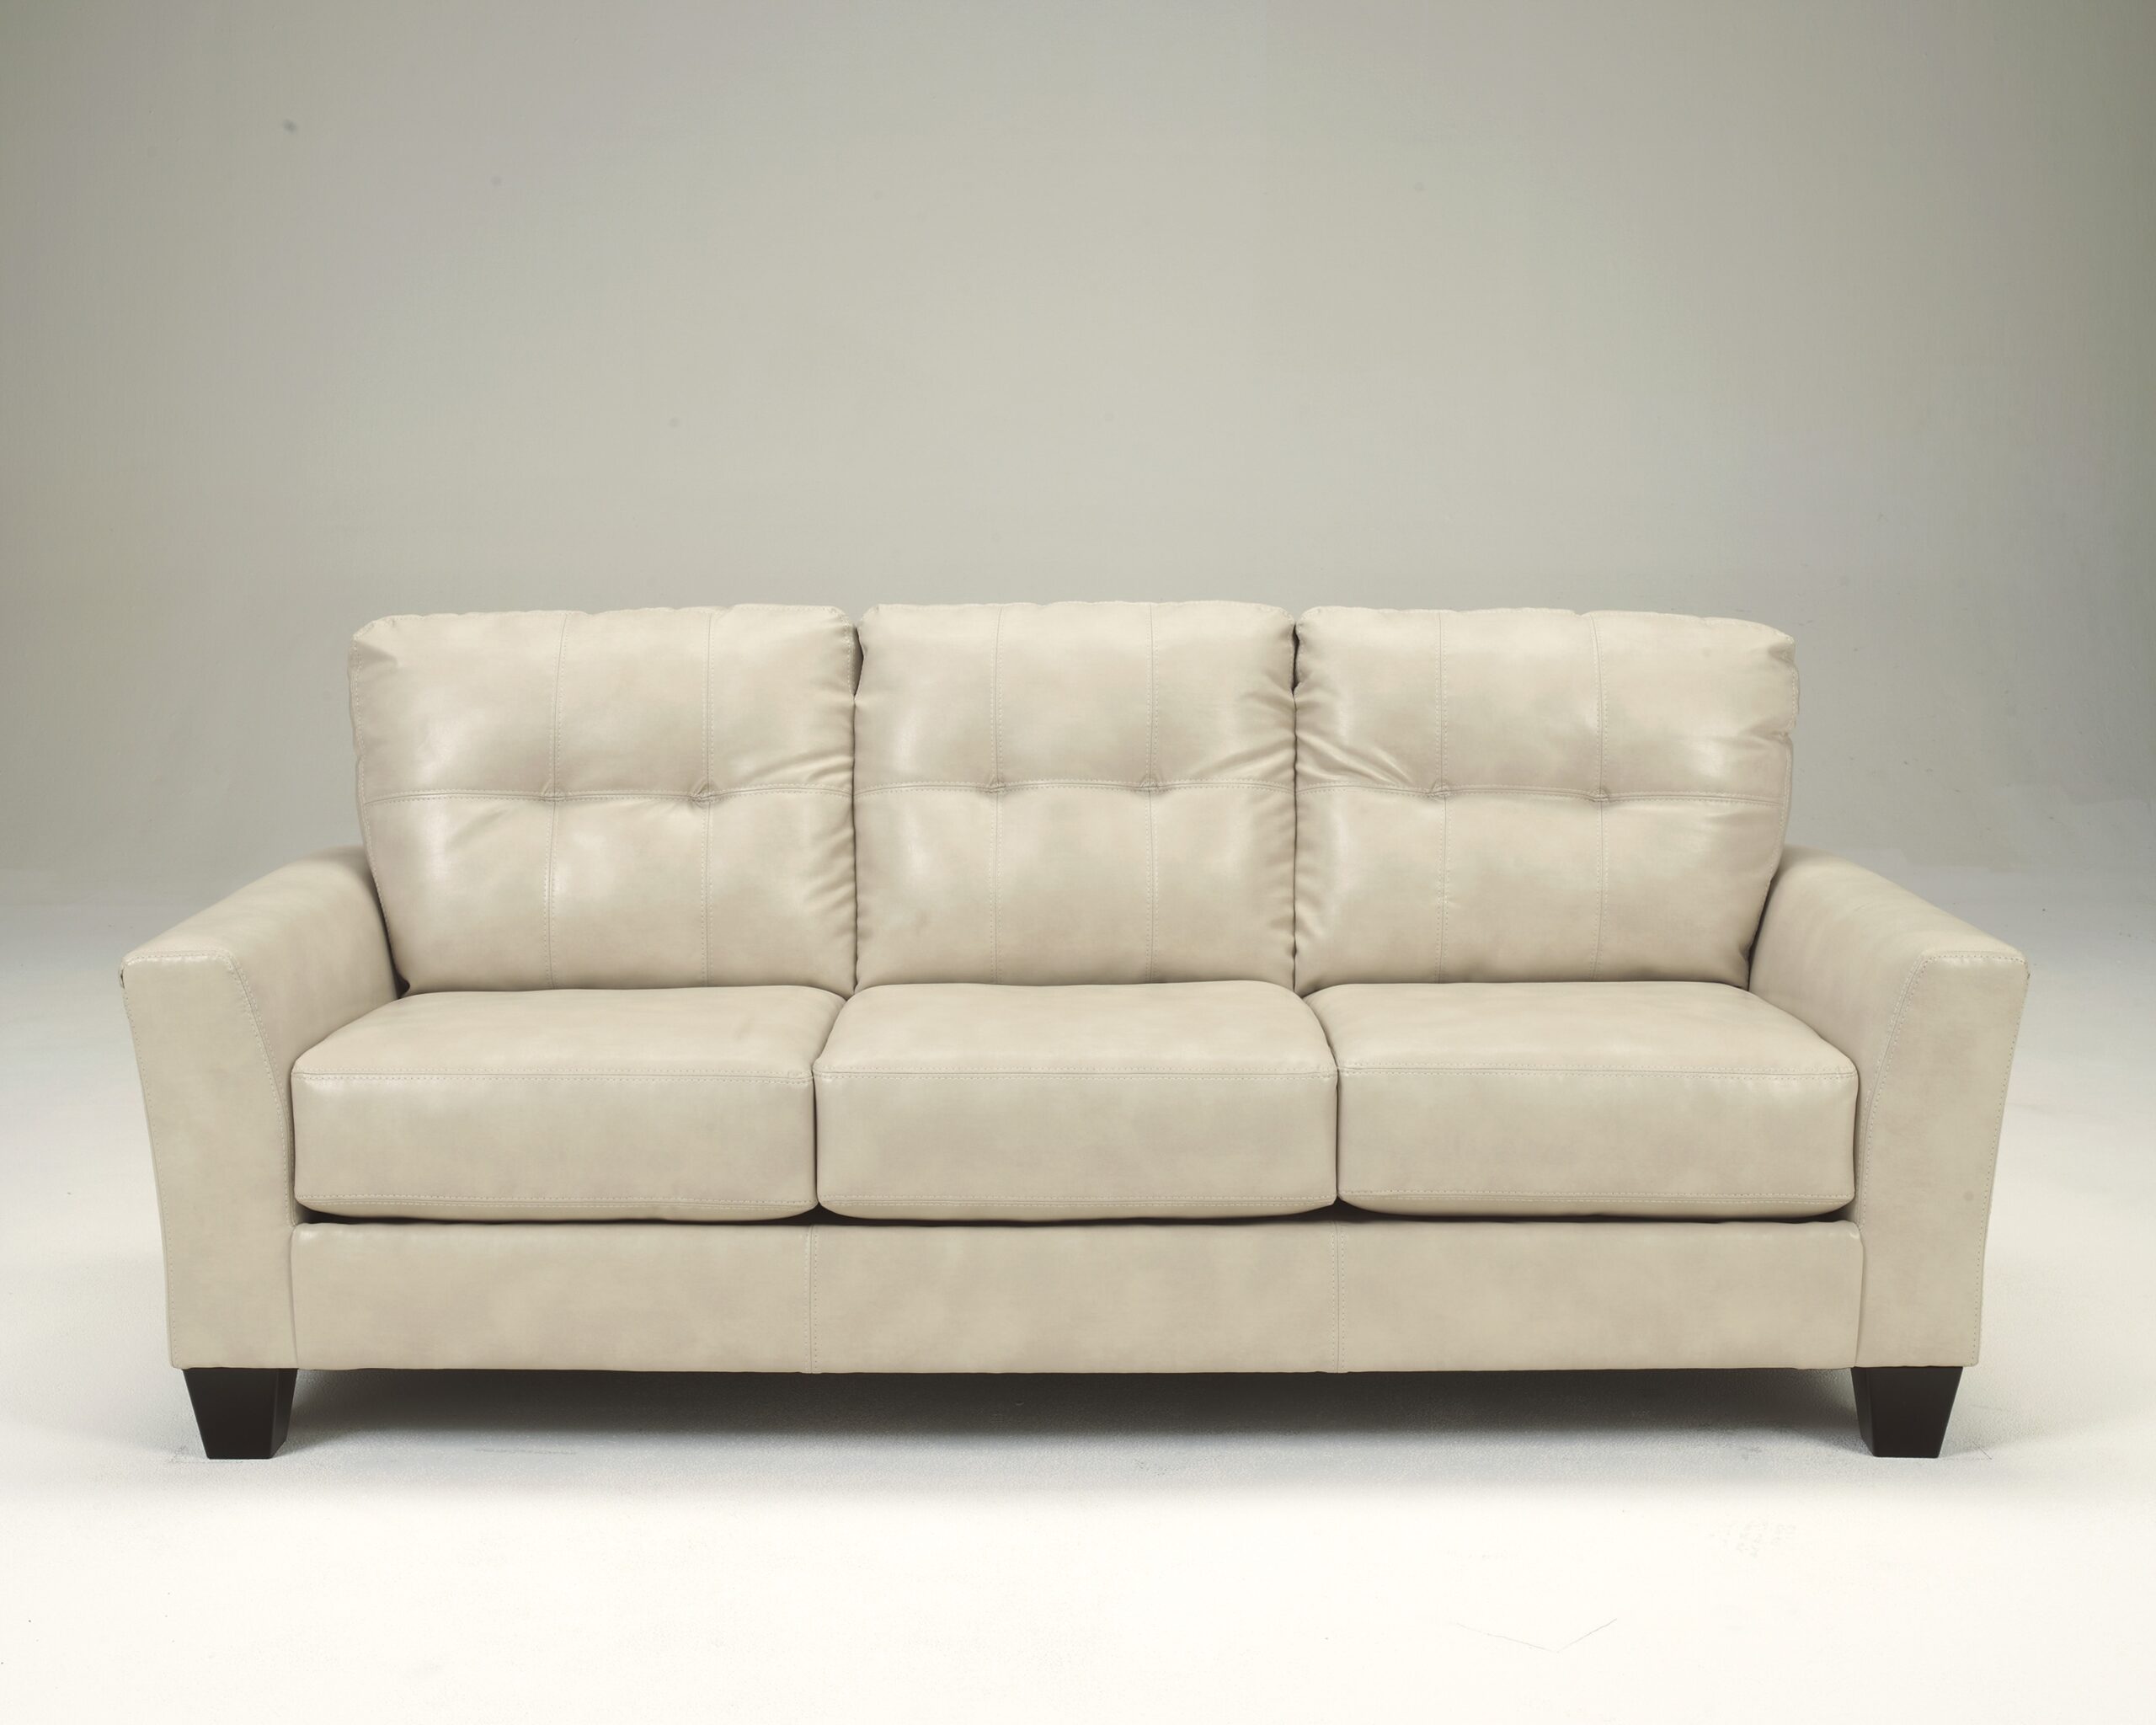 off white leather tufted sofa